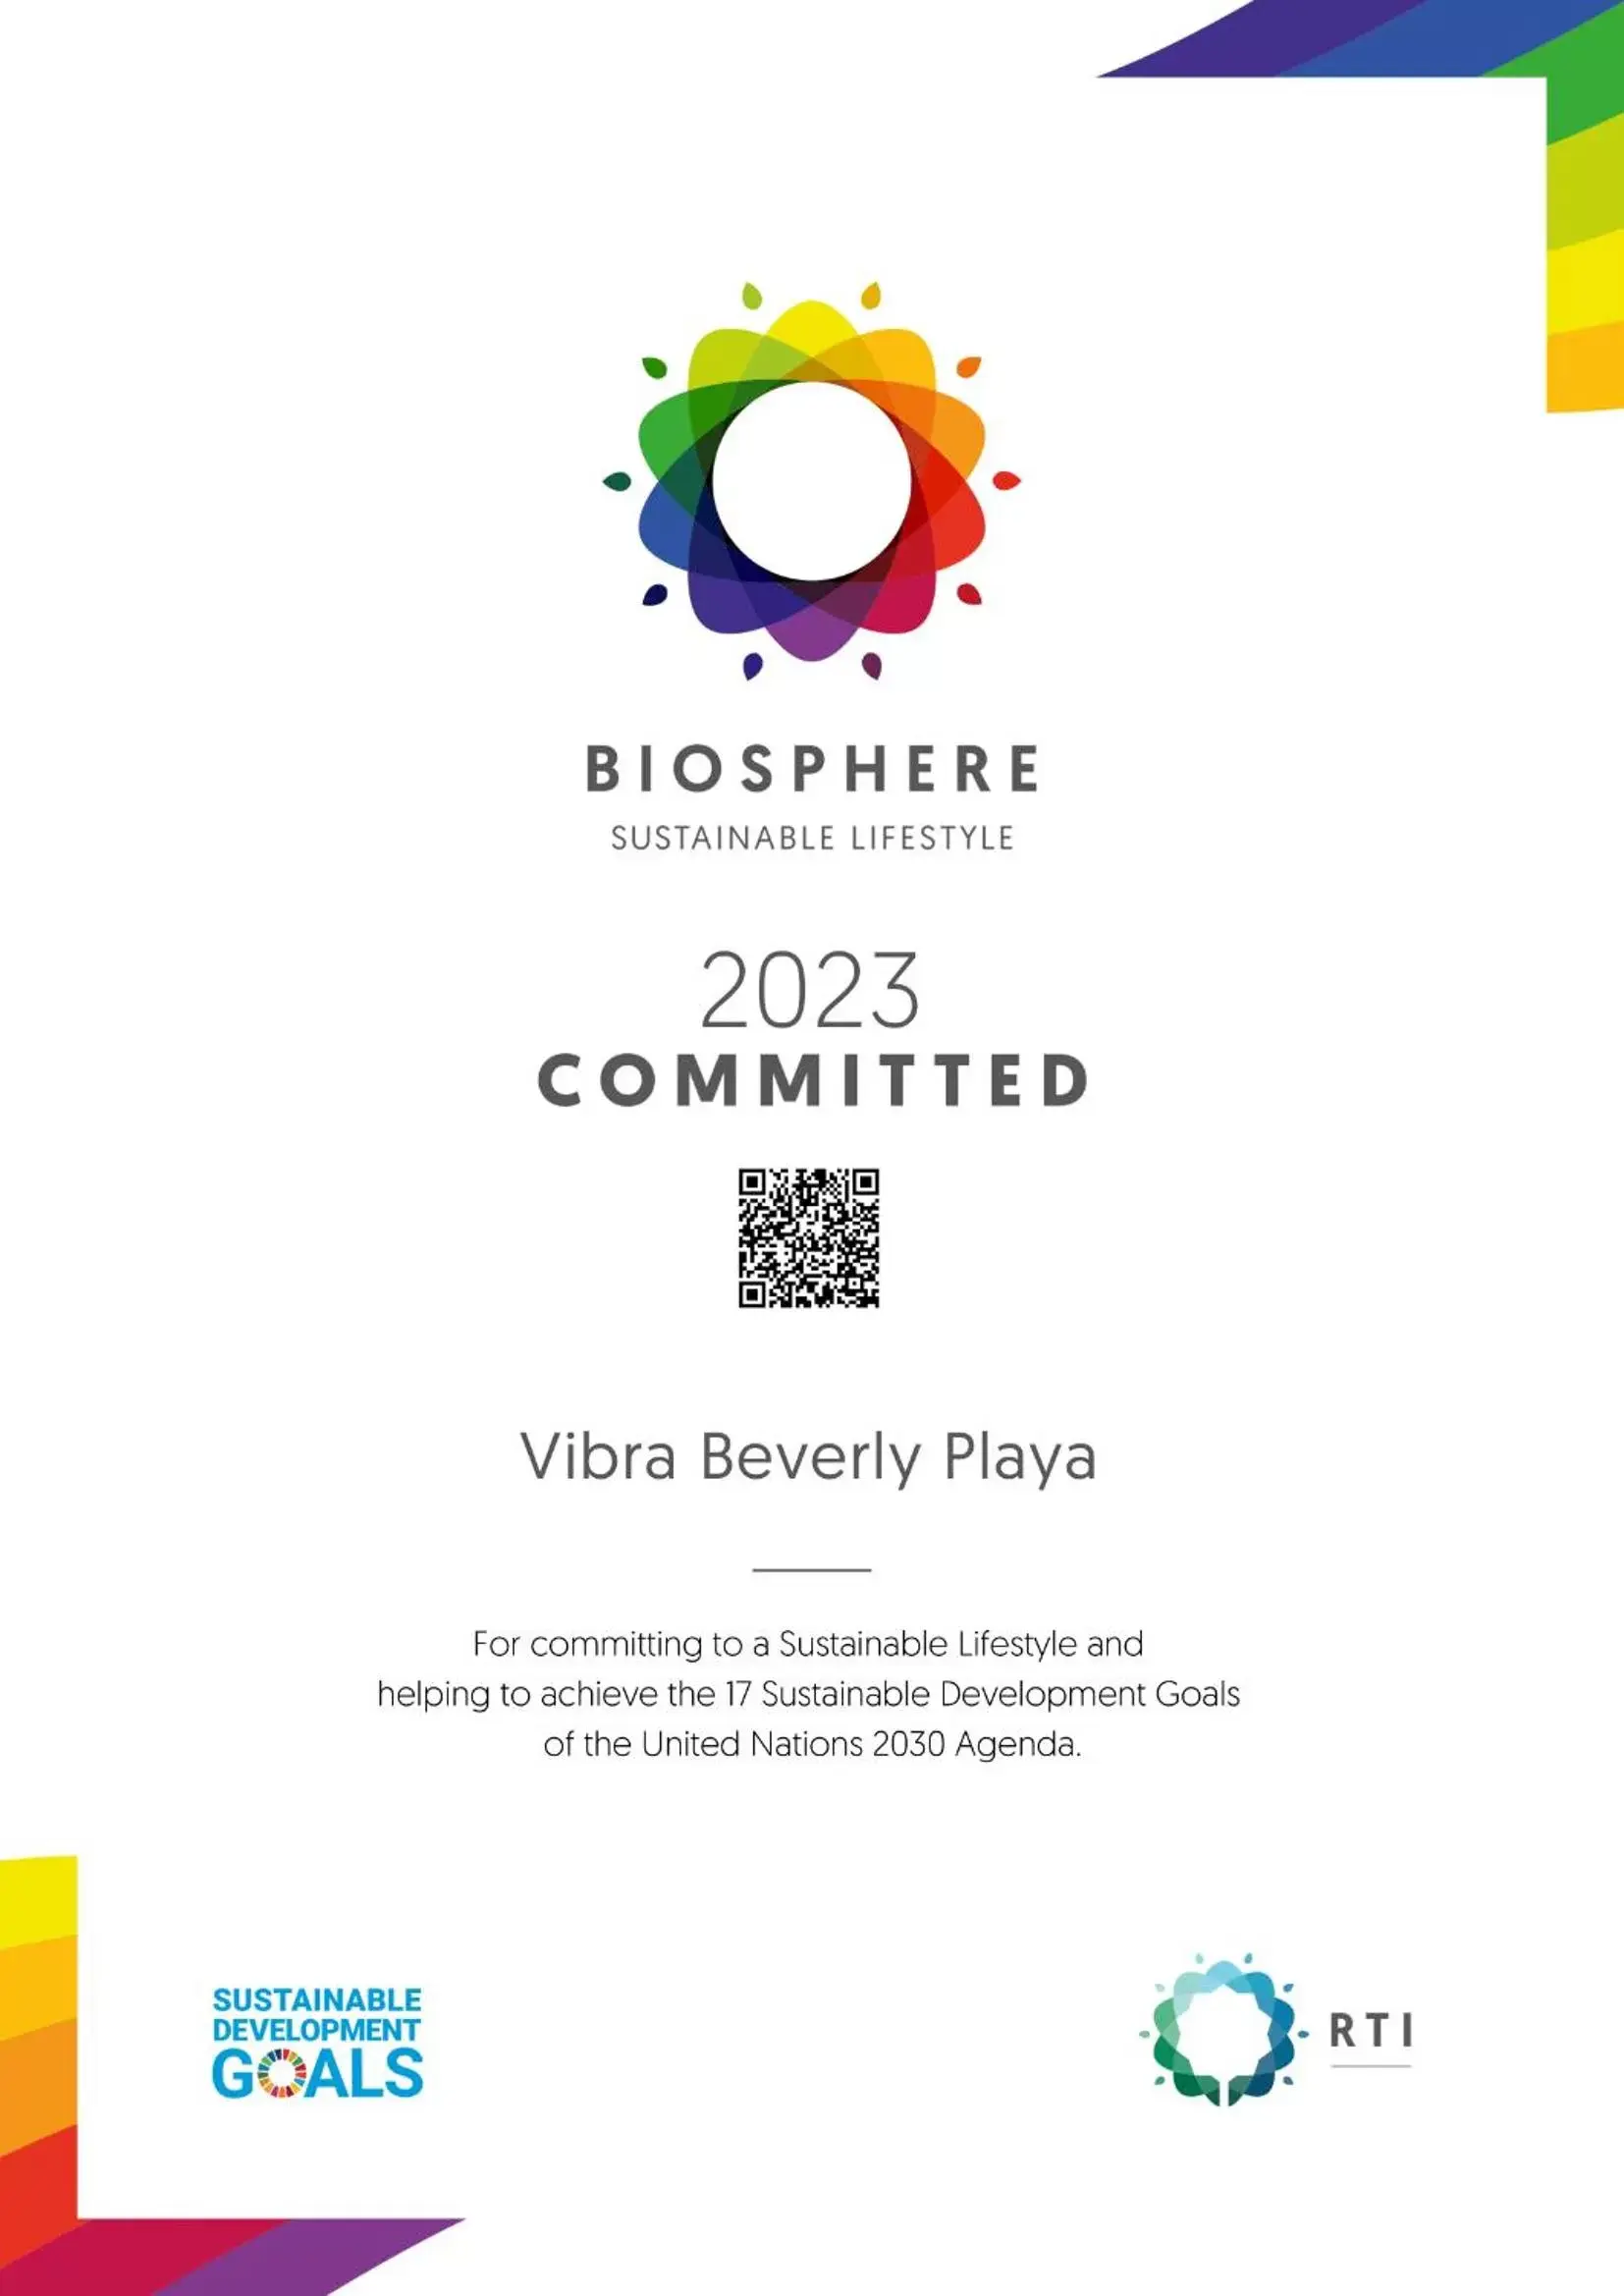 Certificate/Award in Hotel Vibra Beverly Playa